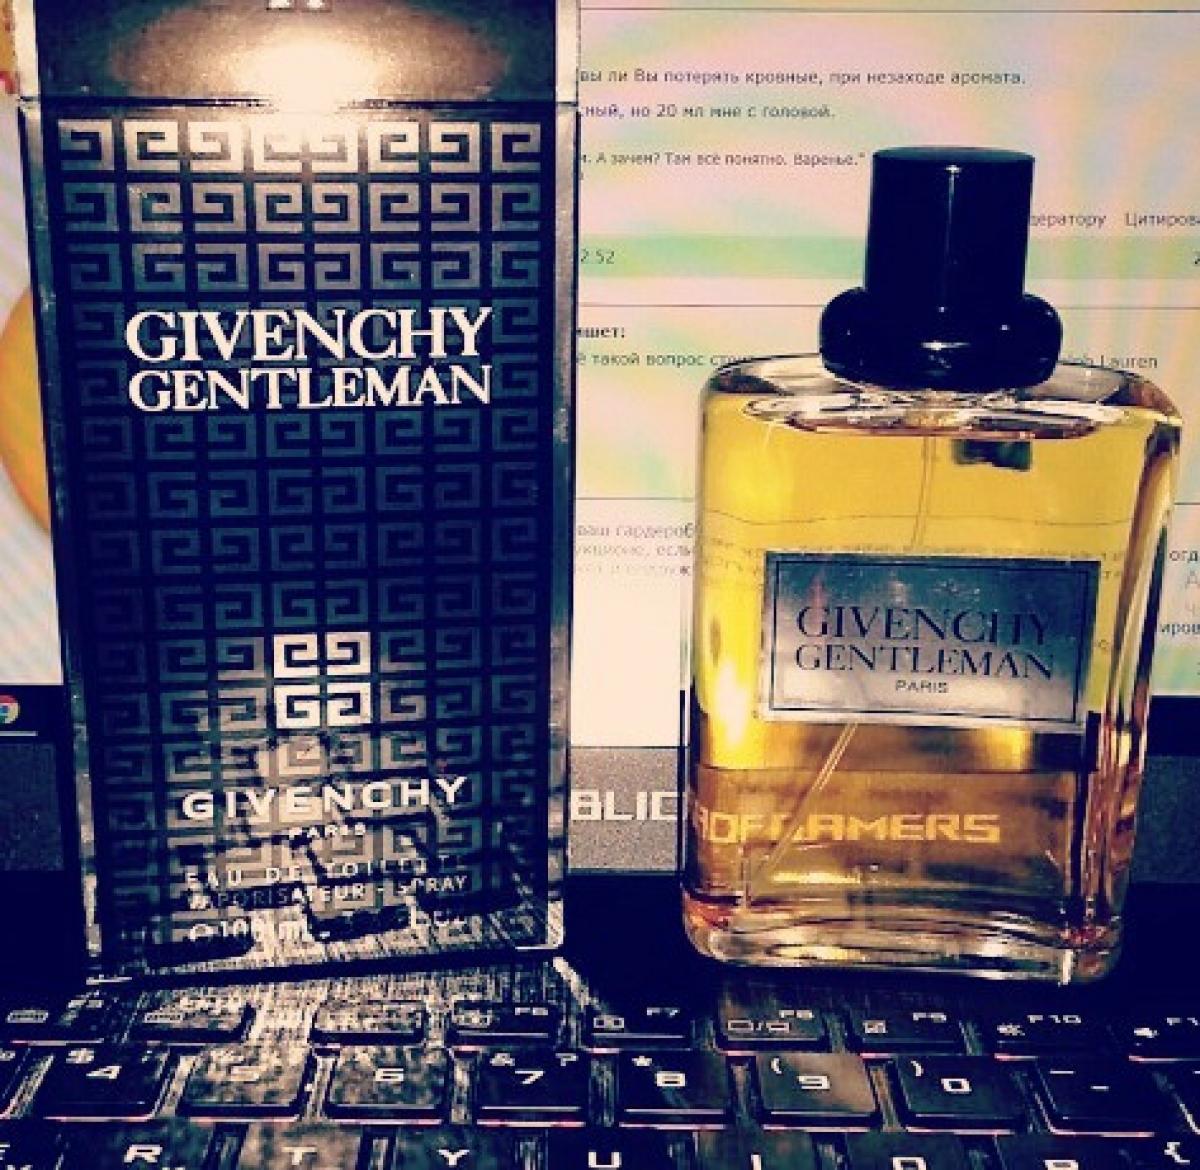 Gentleman (1974) Givenchy cologne - a fragrance for men 1974